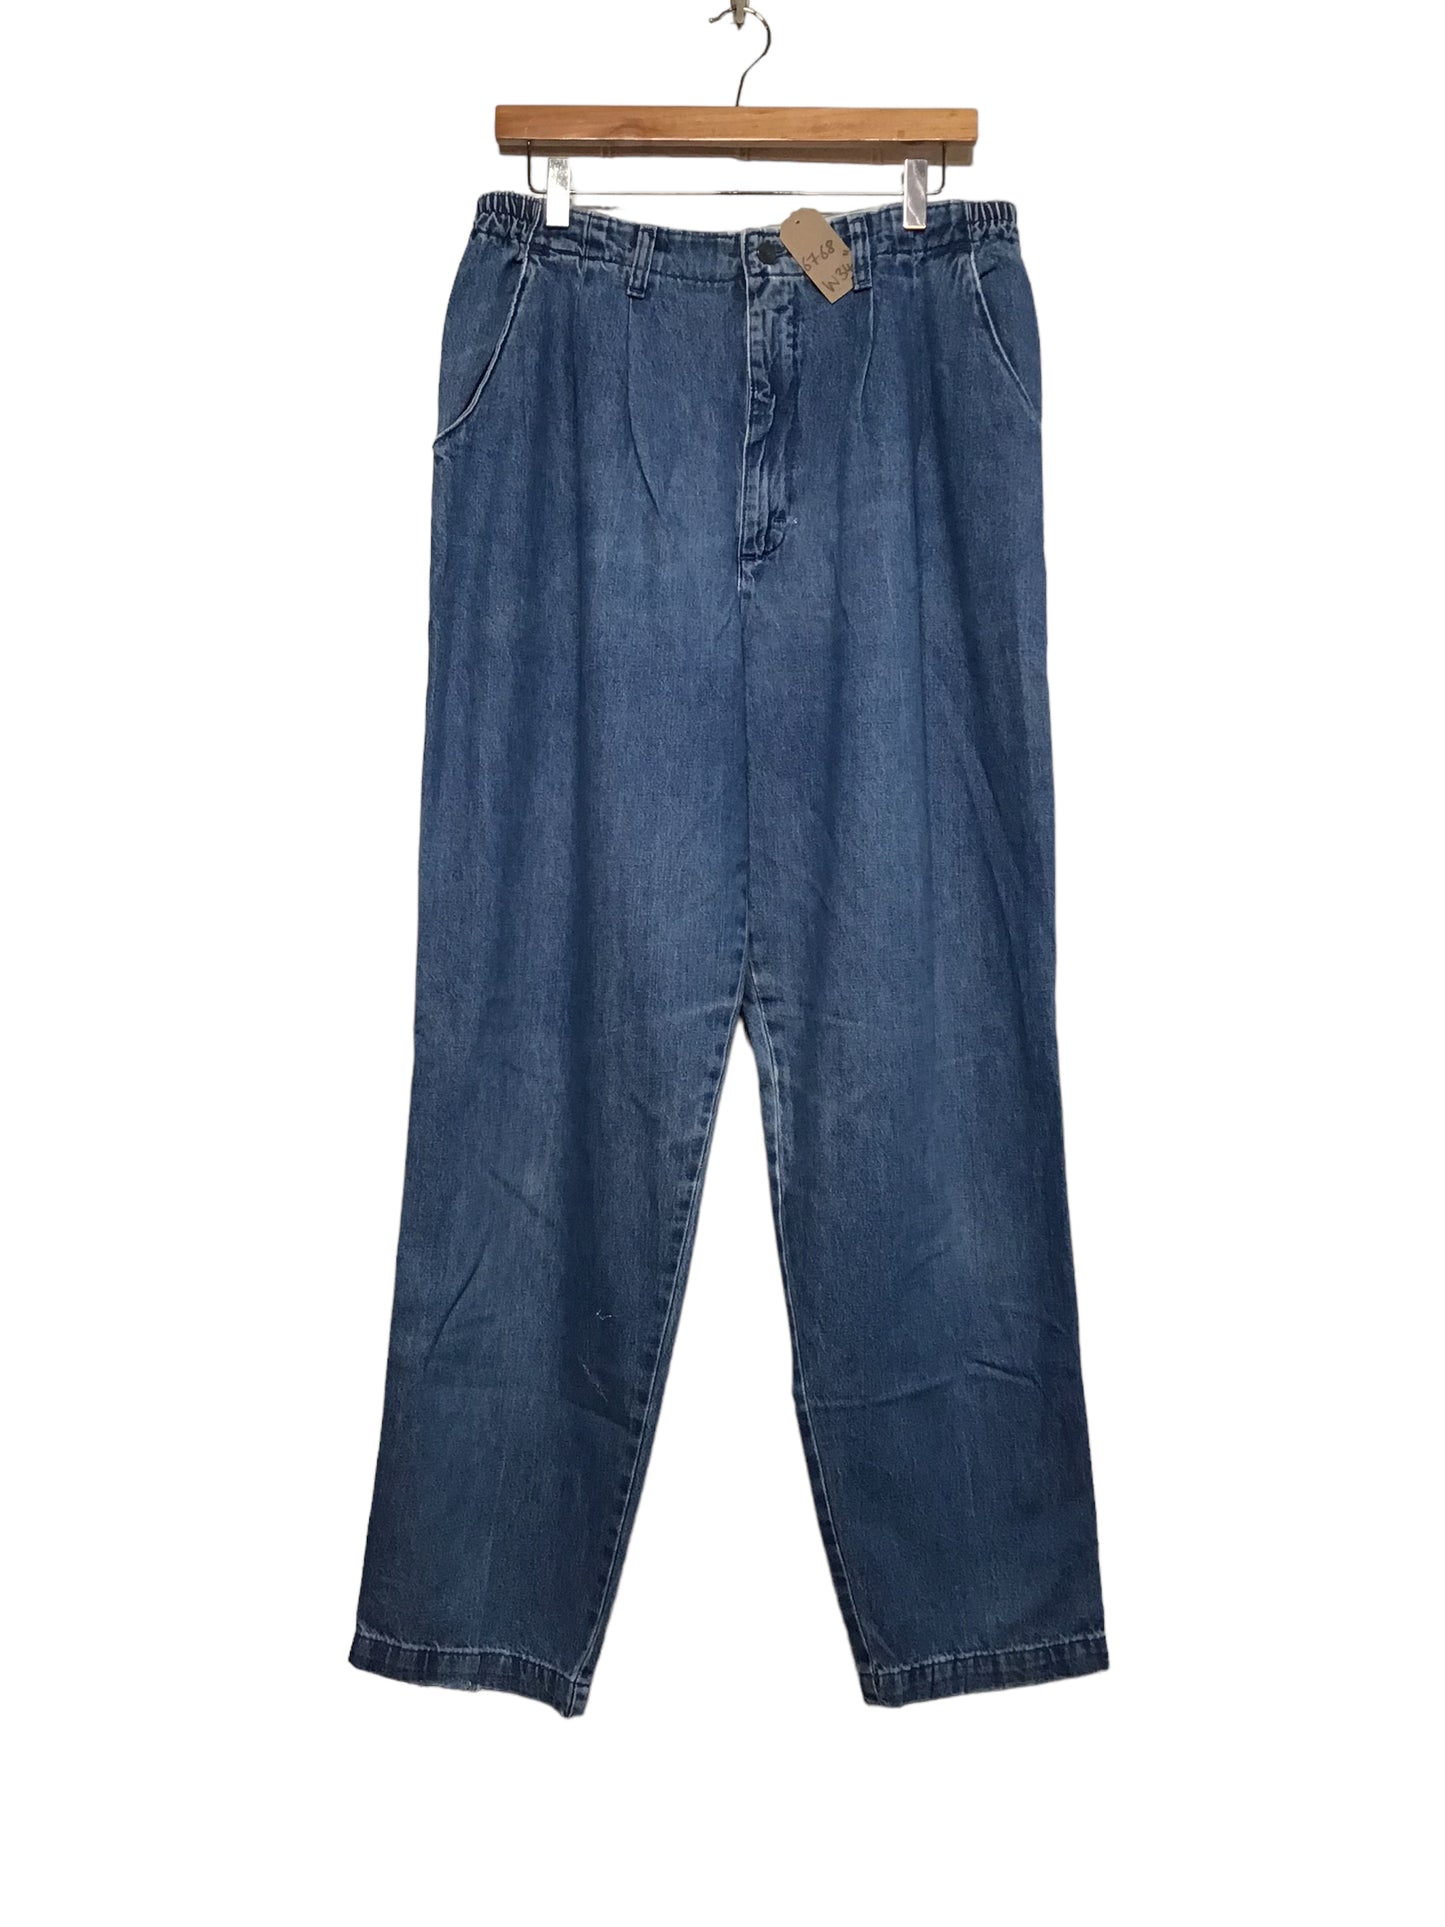 Lee Elasticated Waist Jeans (34x32)